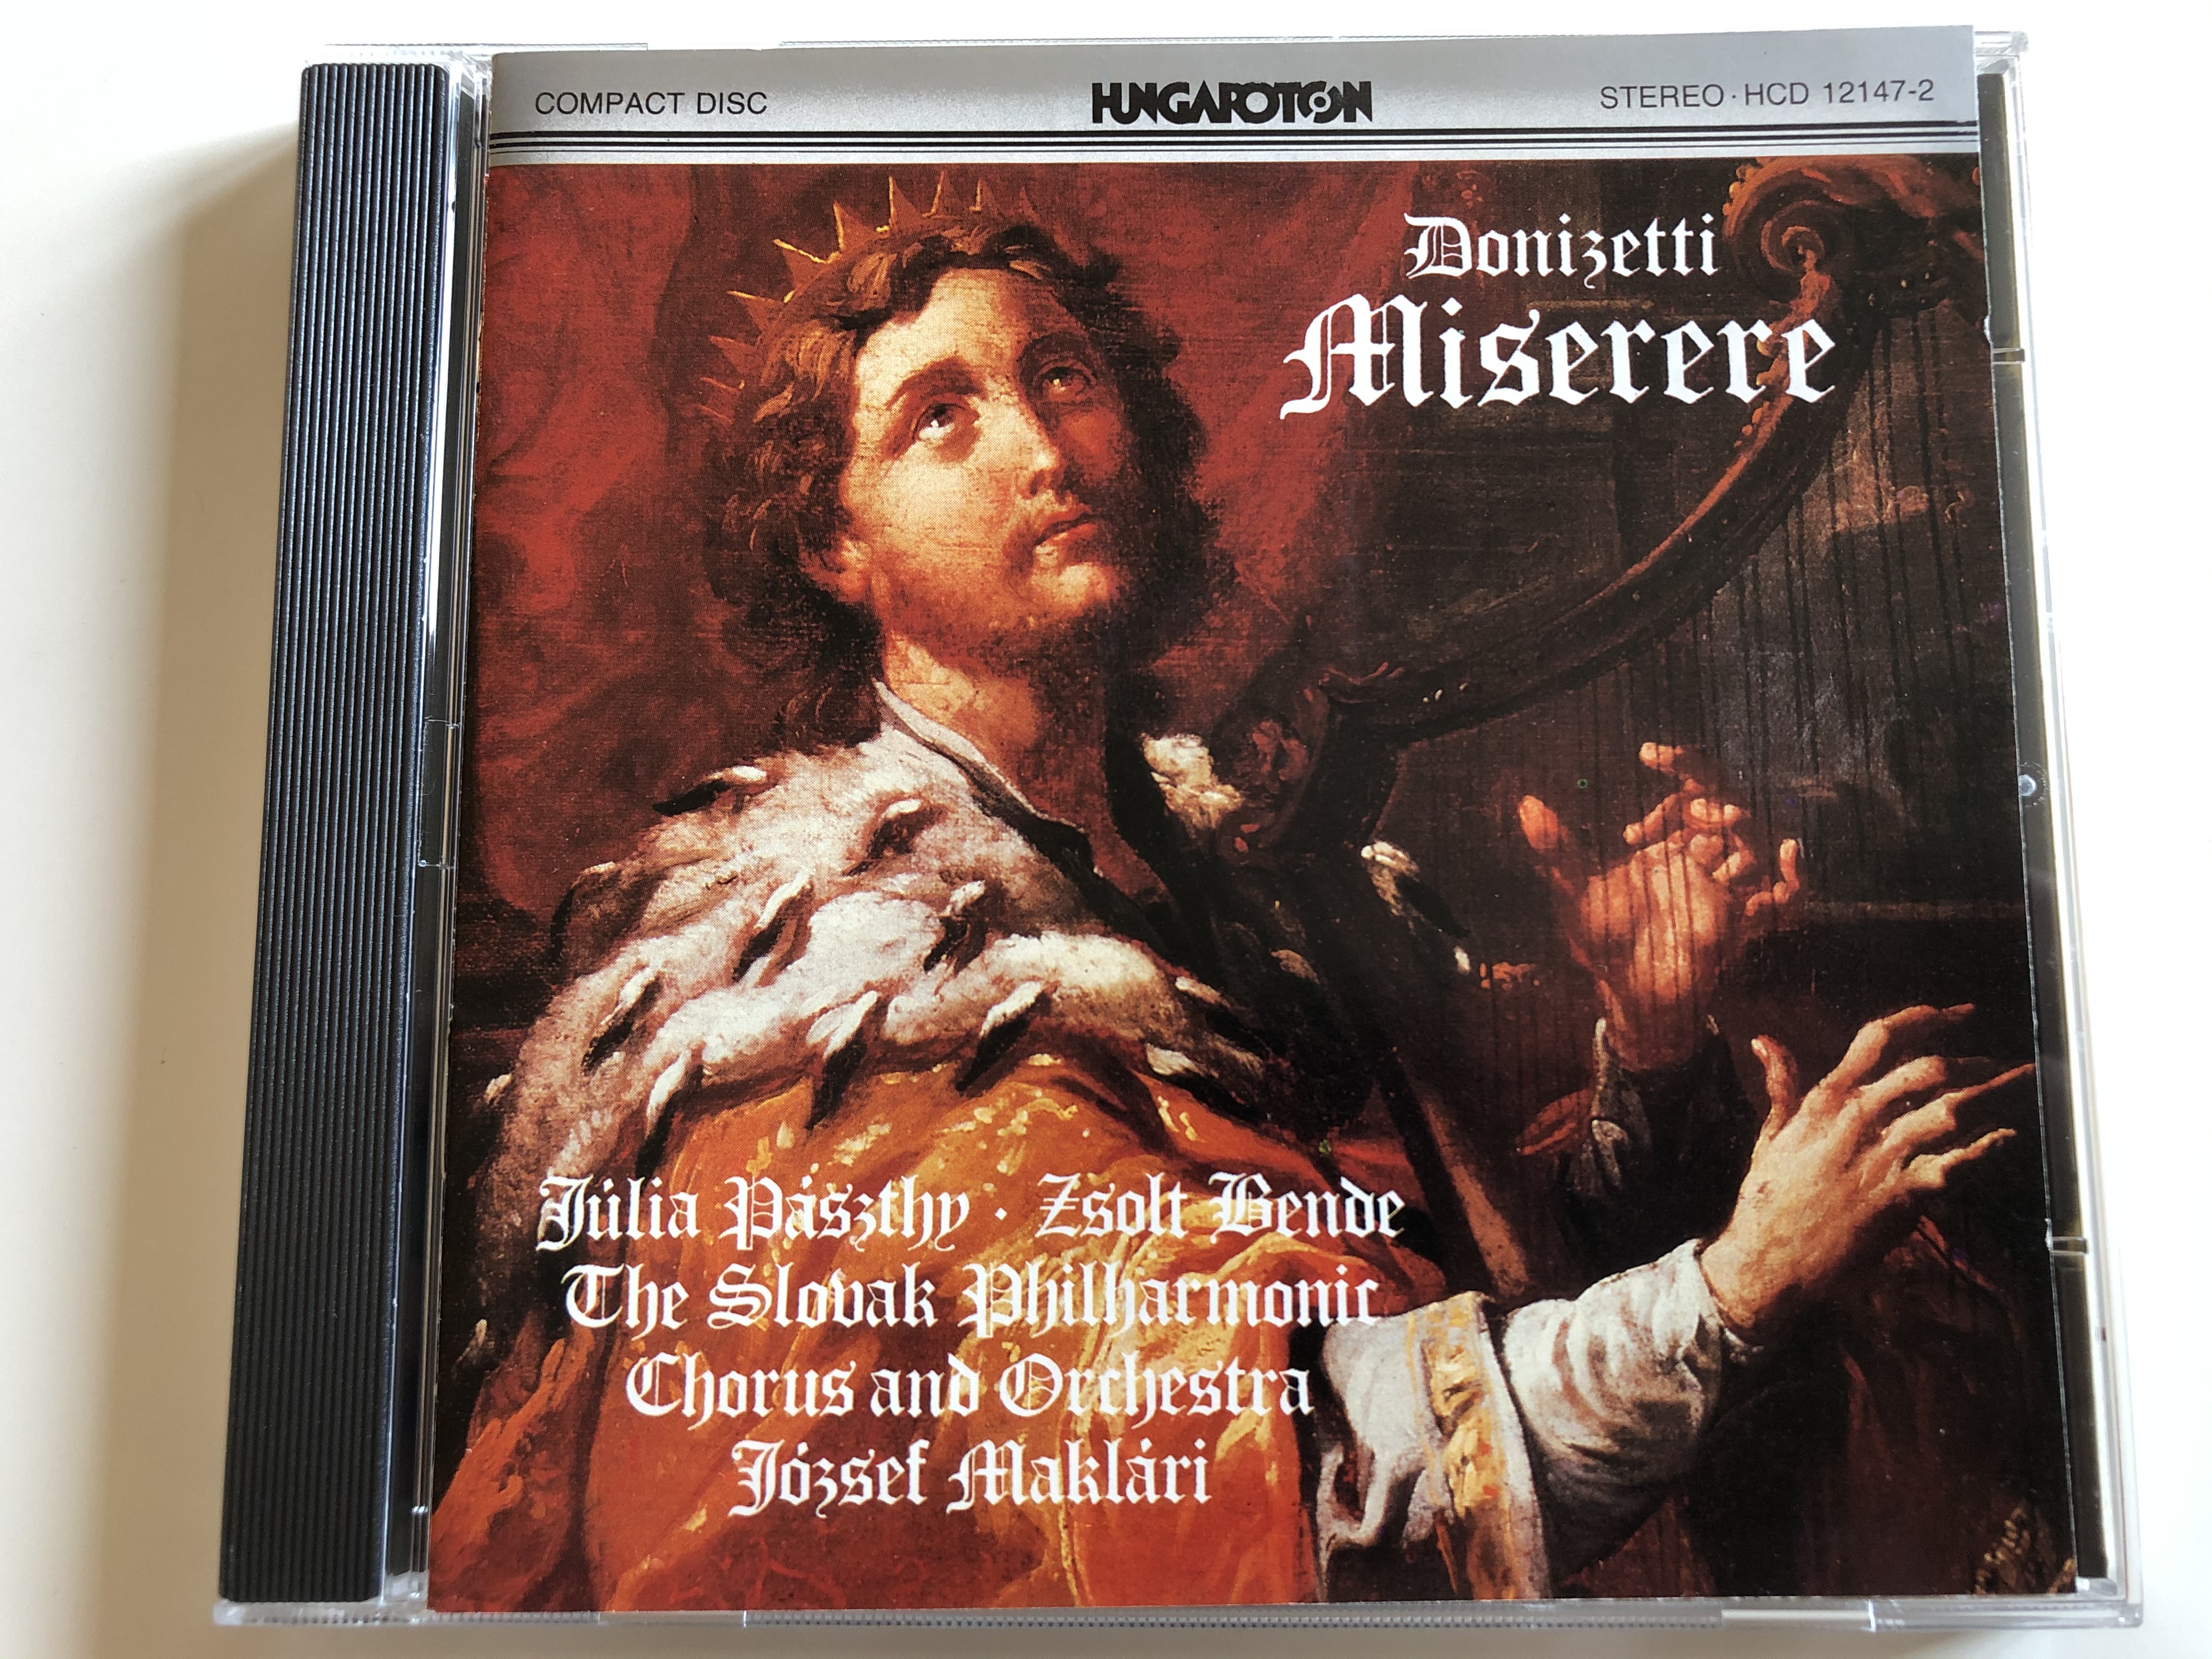 donizetti-miserere-j-lia-p-szthy-zsolt-bende-the-slovak-philharmonic-chorus-and-orchestra-j-zsef-makl-ri-hungaroton-audio-cd-1980-stereo-hcd-12147-2-1-.jpg